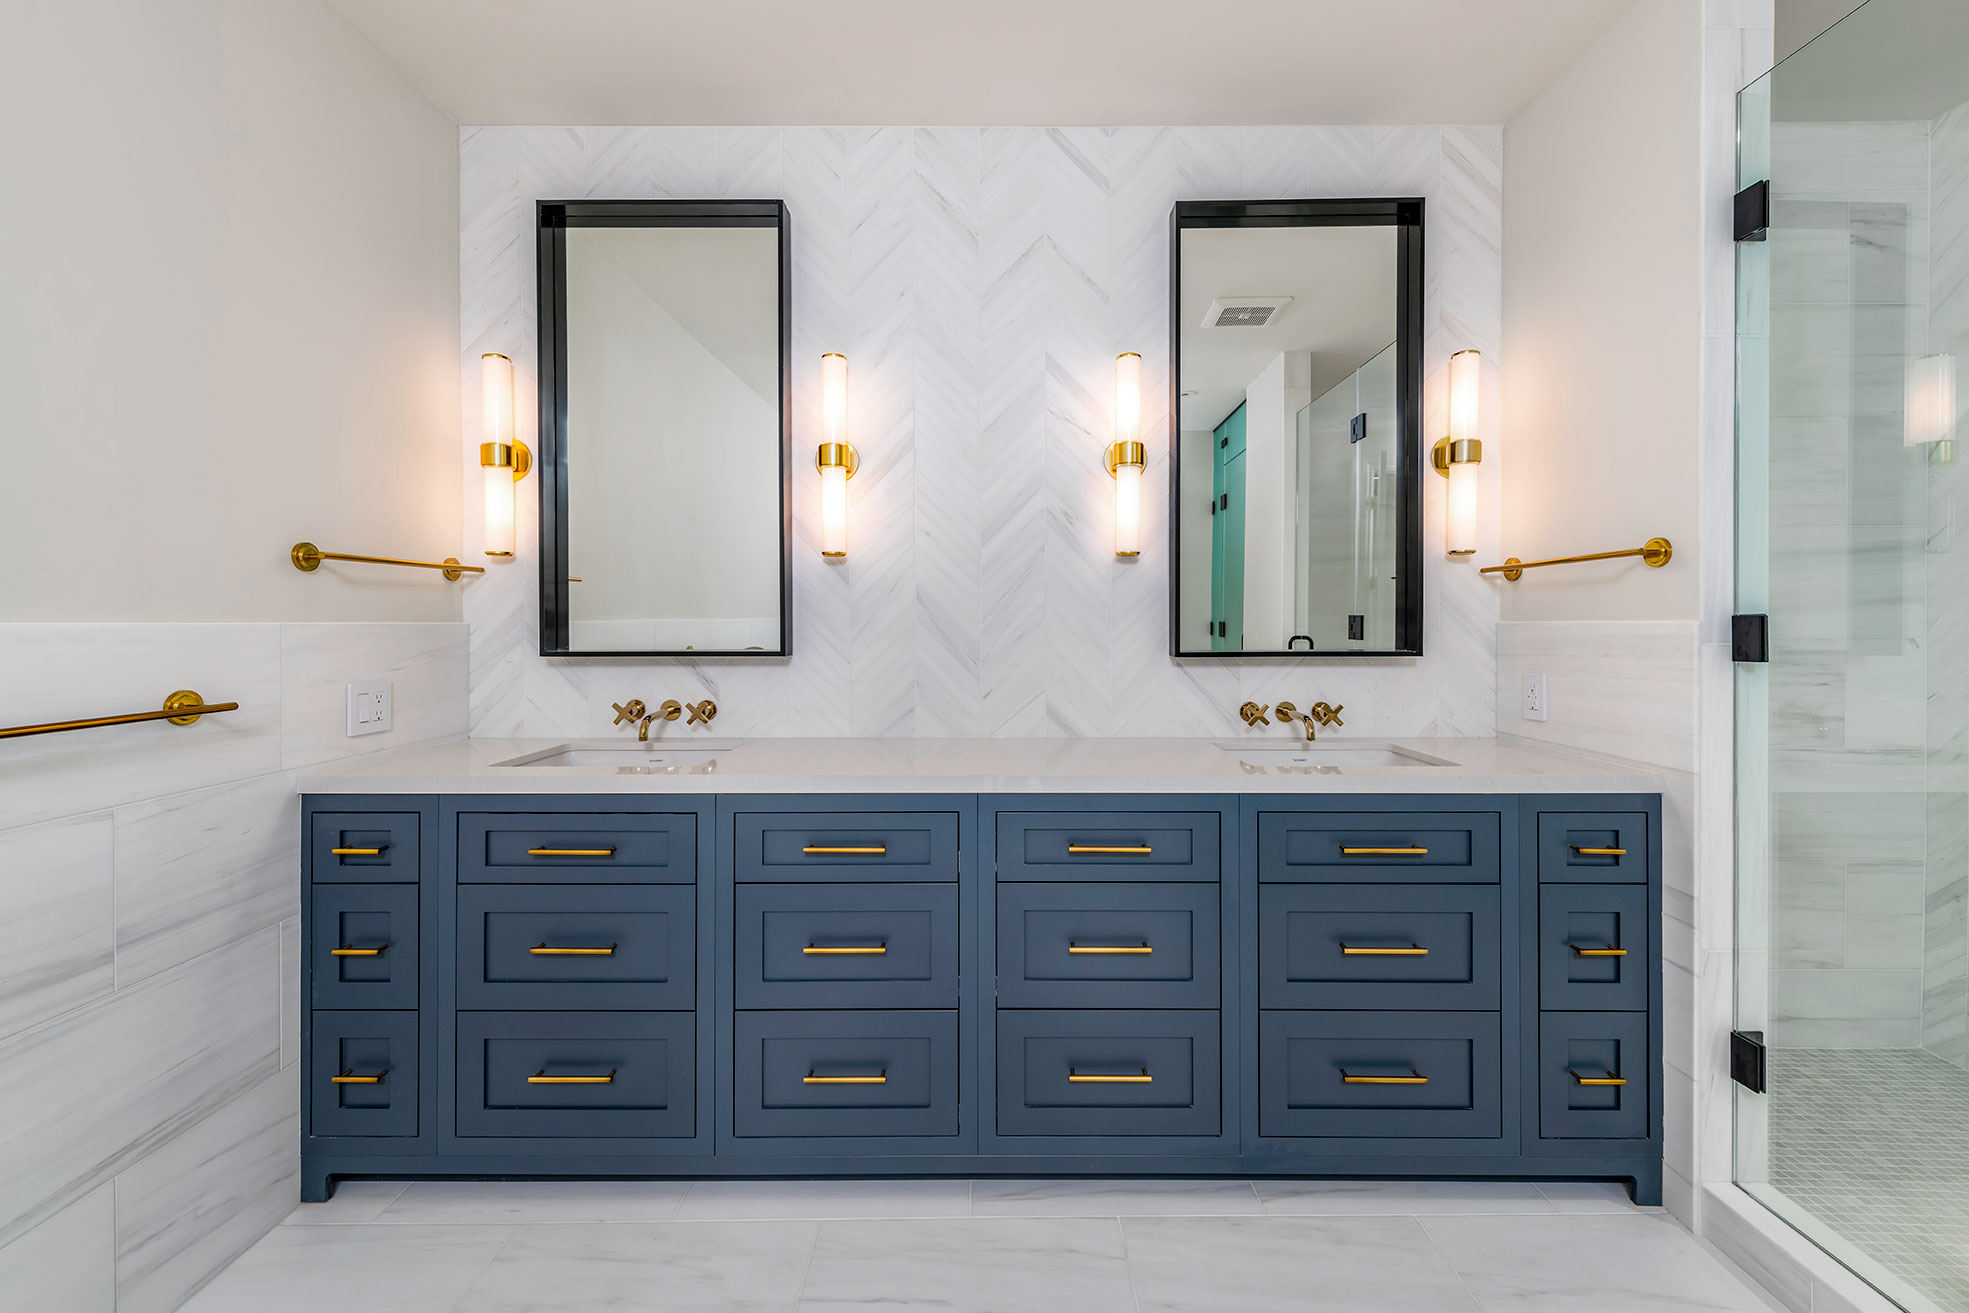 SF Pacific Heights bathroom remodeled vanity and beautiful tile work